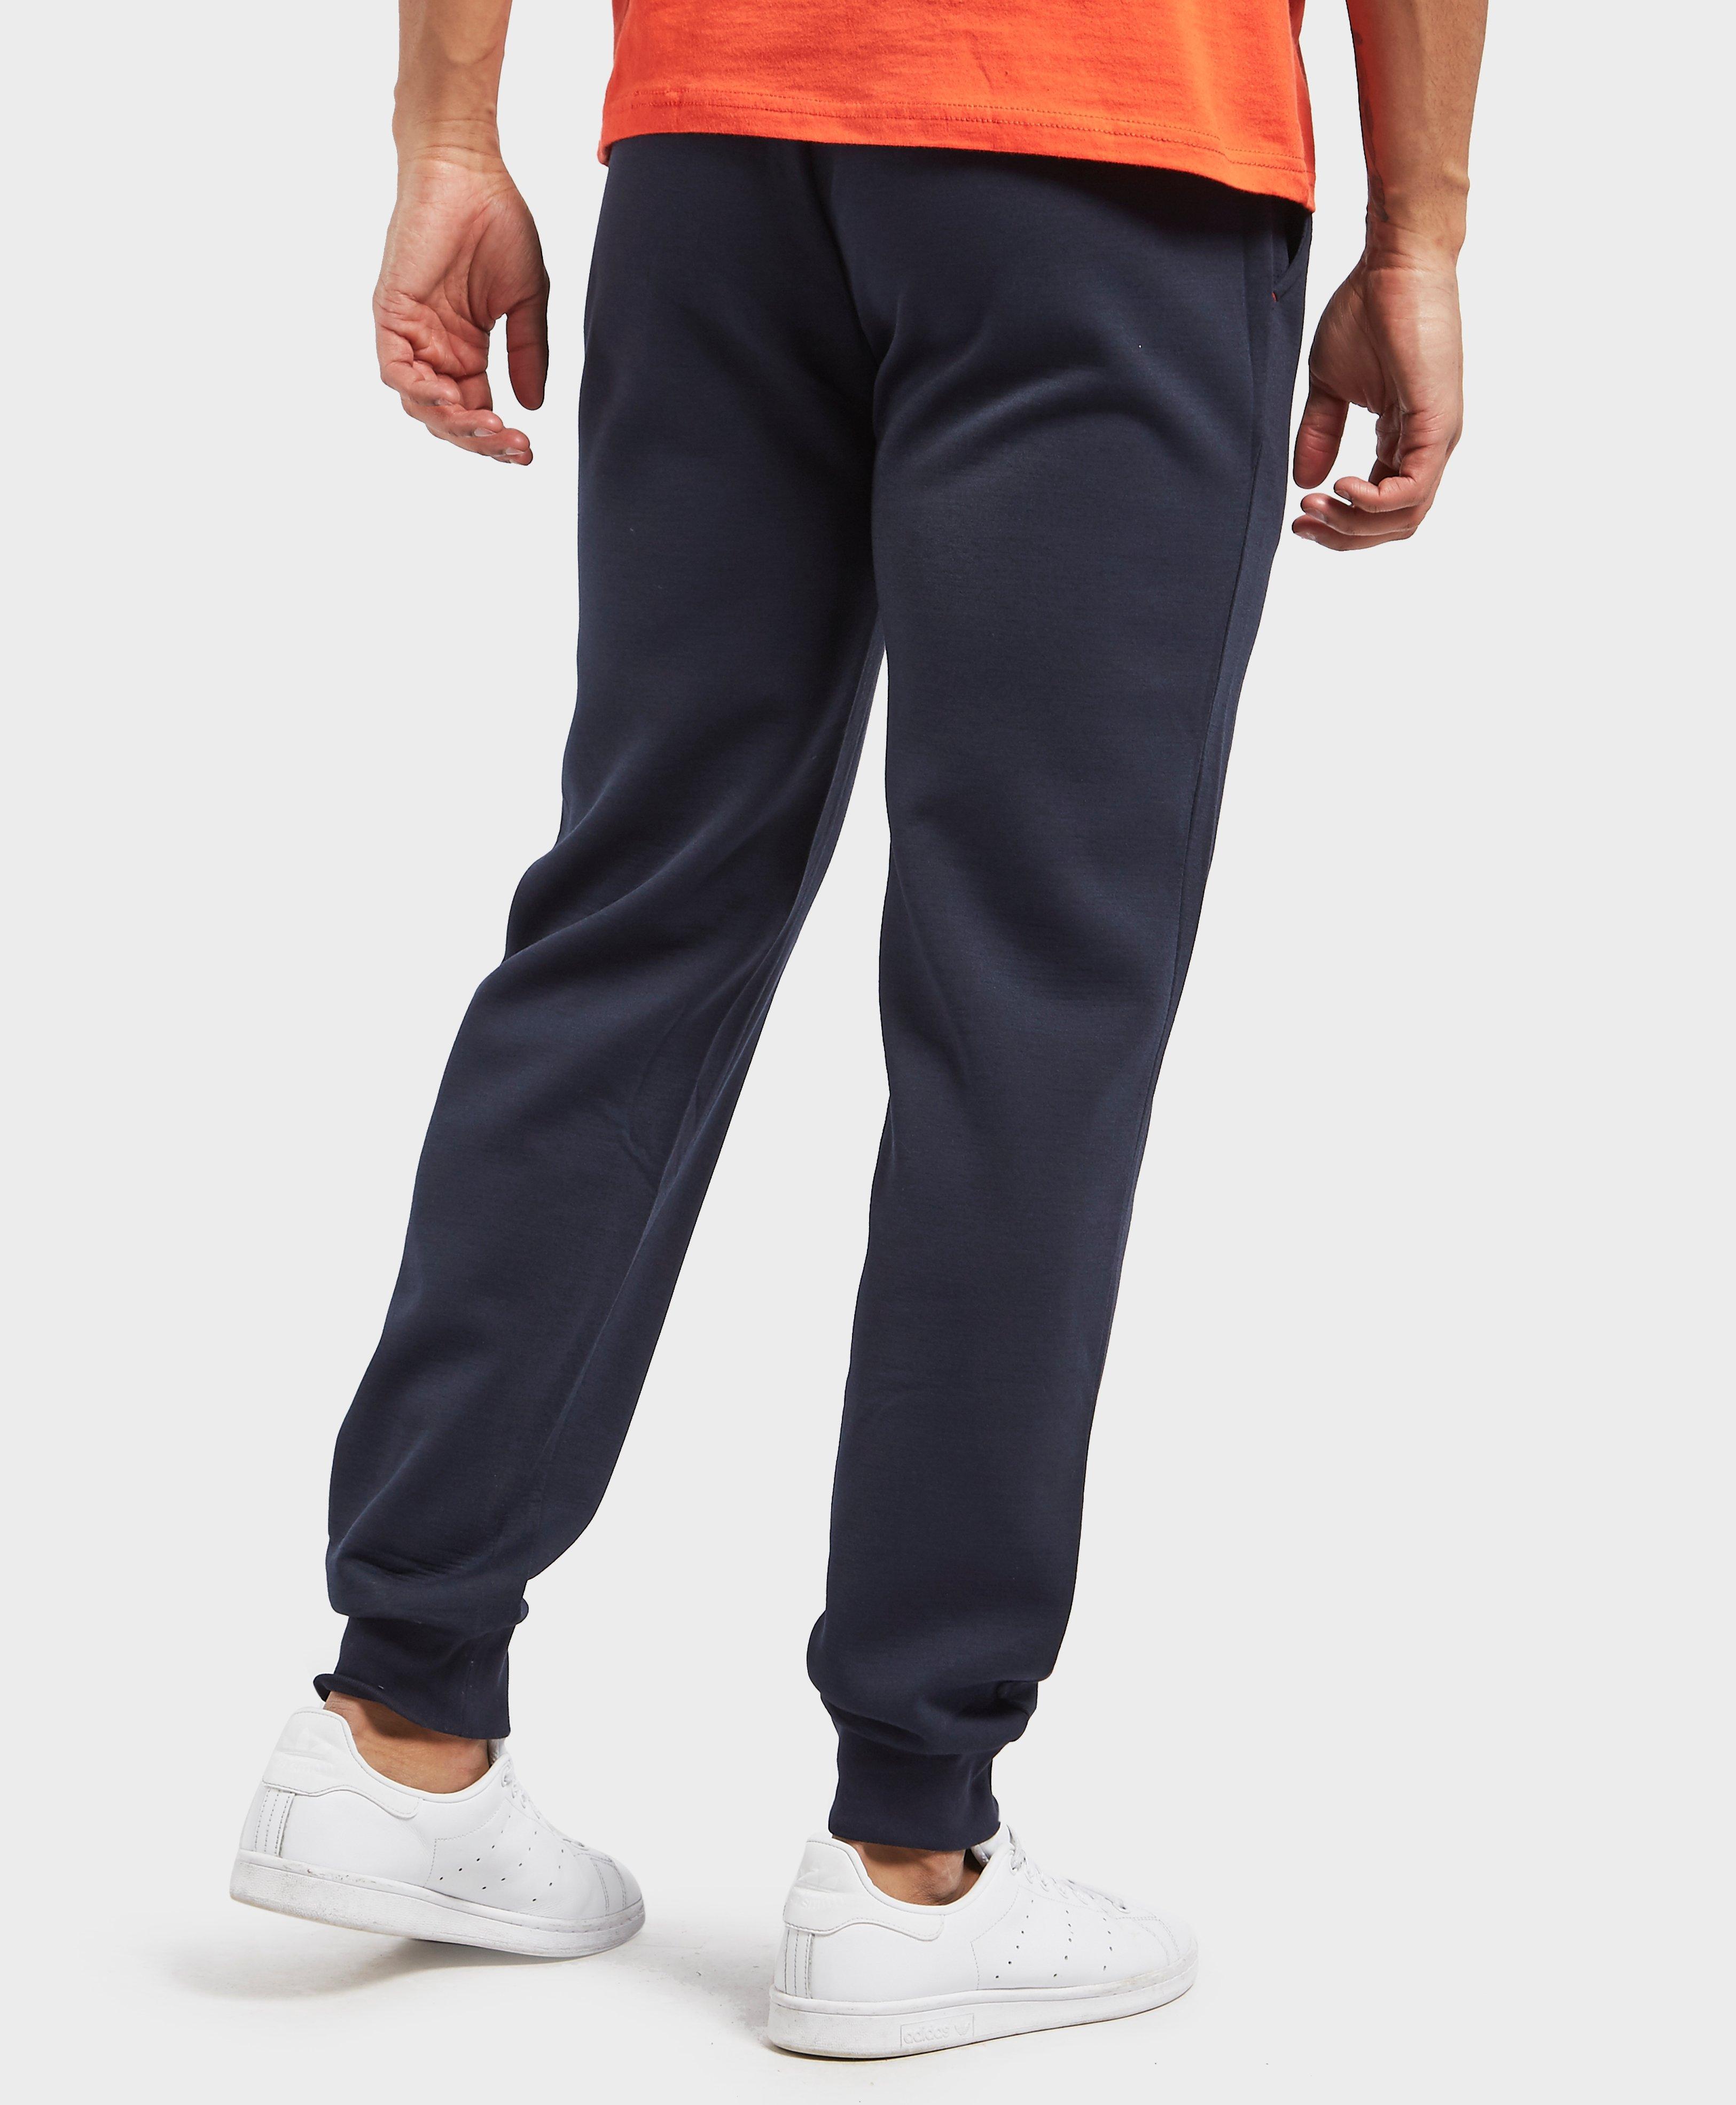 Lyst - Tommy Hilfiger Large Leg Brand Track Pants in Blue for Men